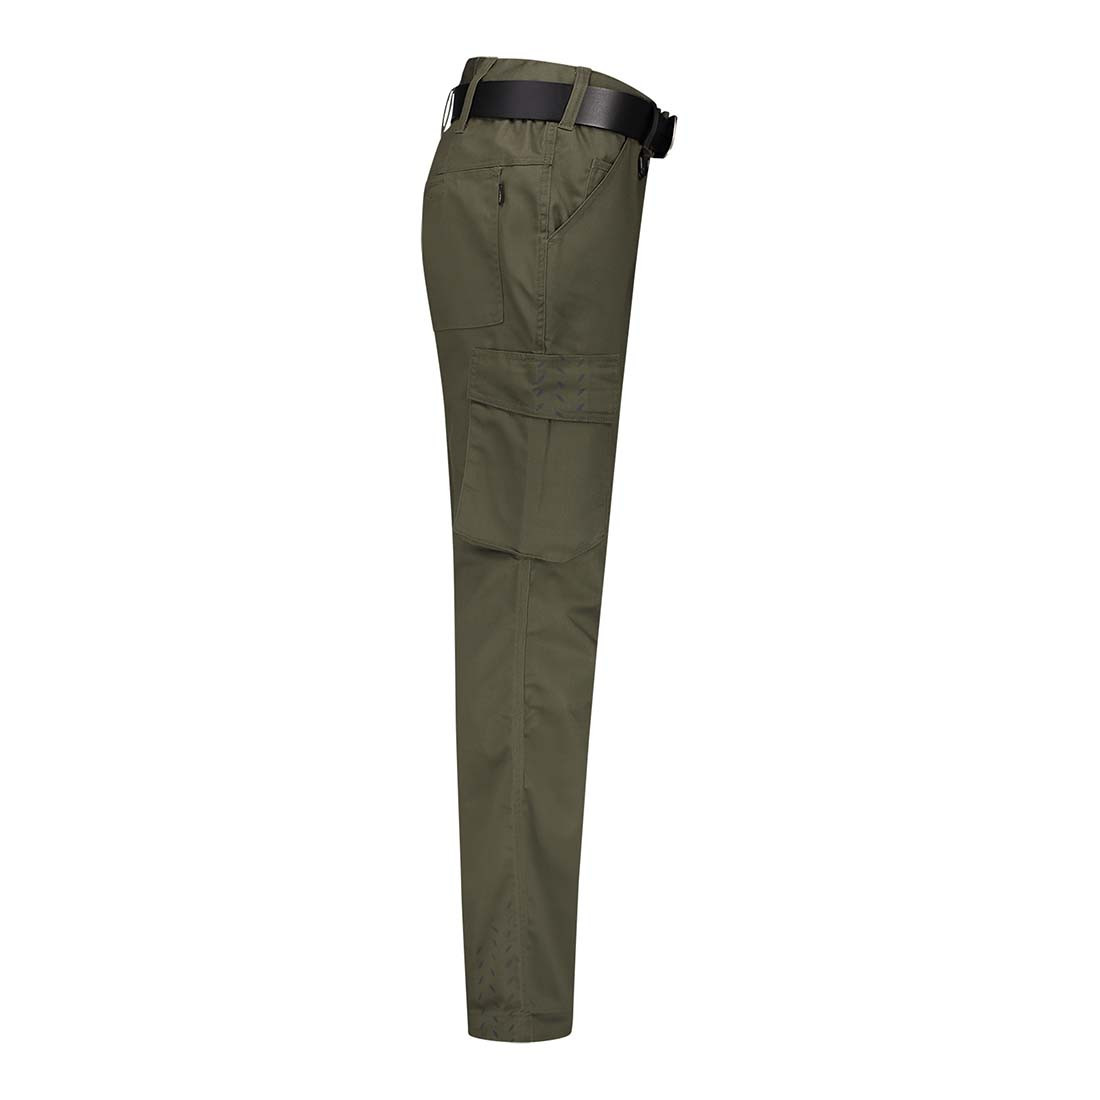 Unisex Work Trousers - Safetywear